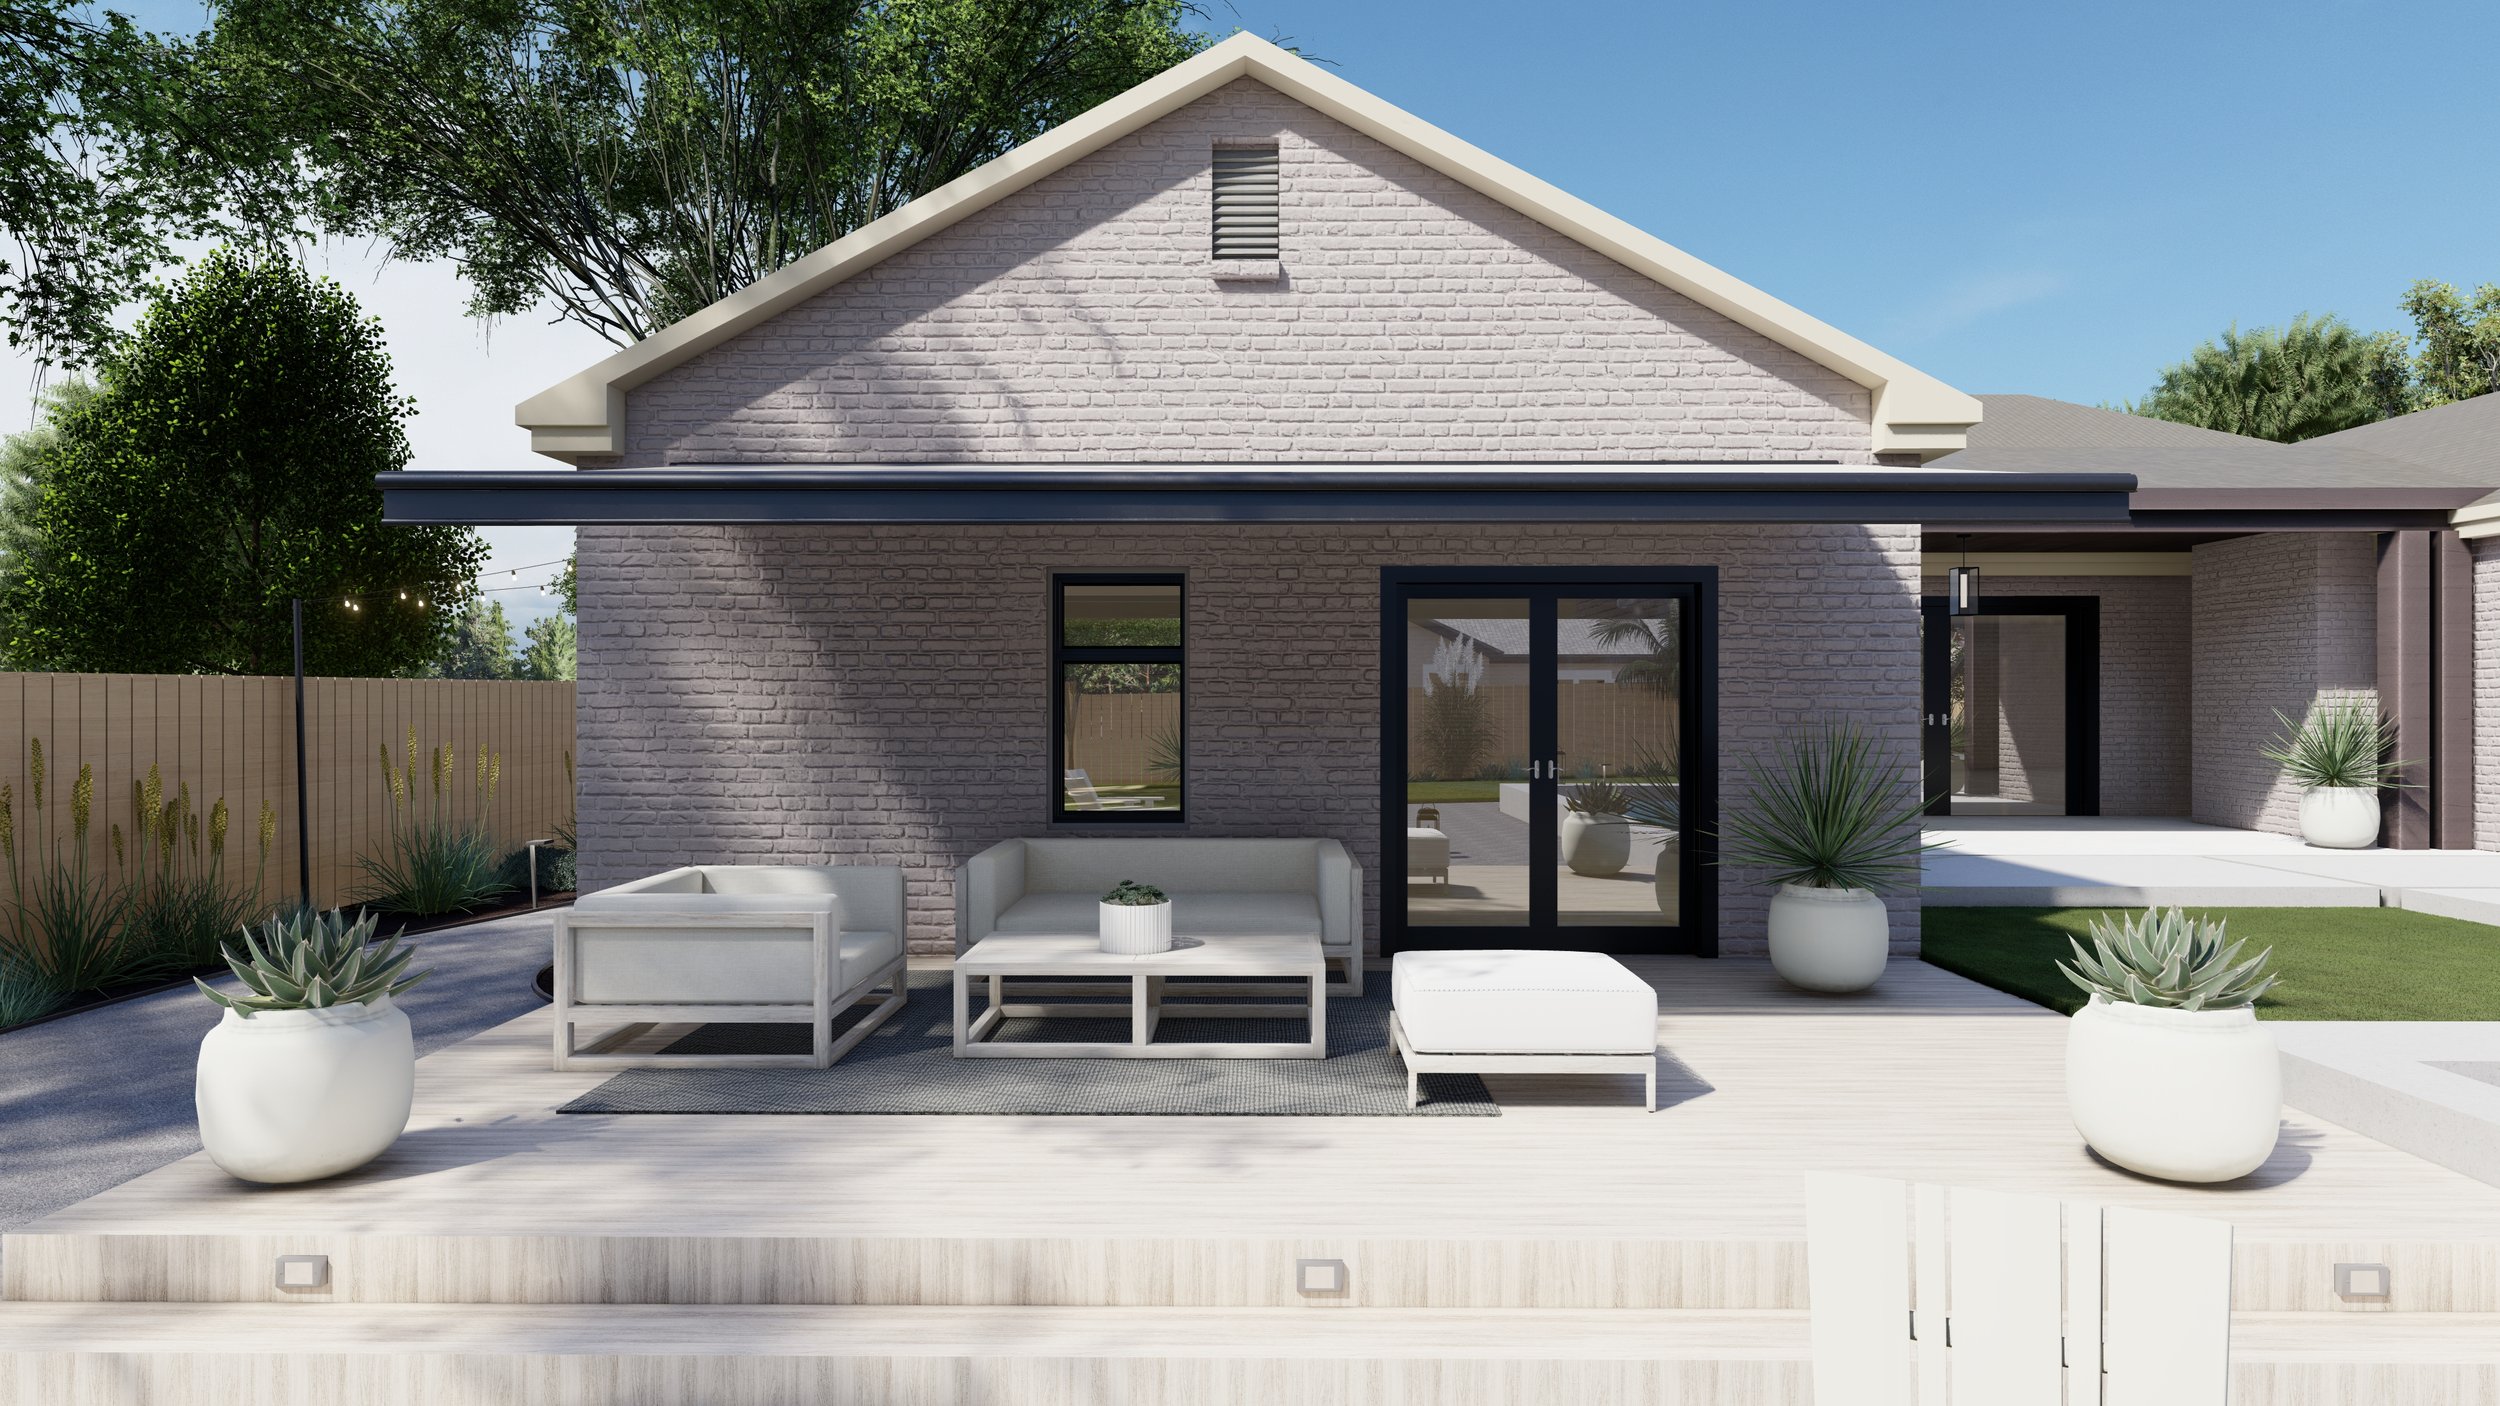 Backyard design with covered back deck and teak outdoor living room set.